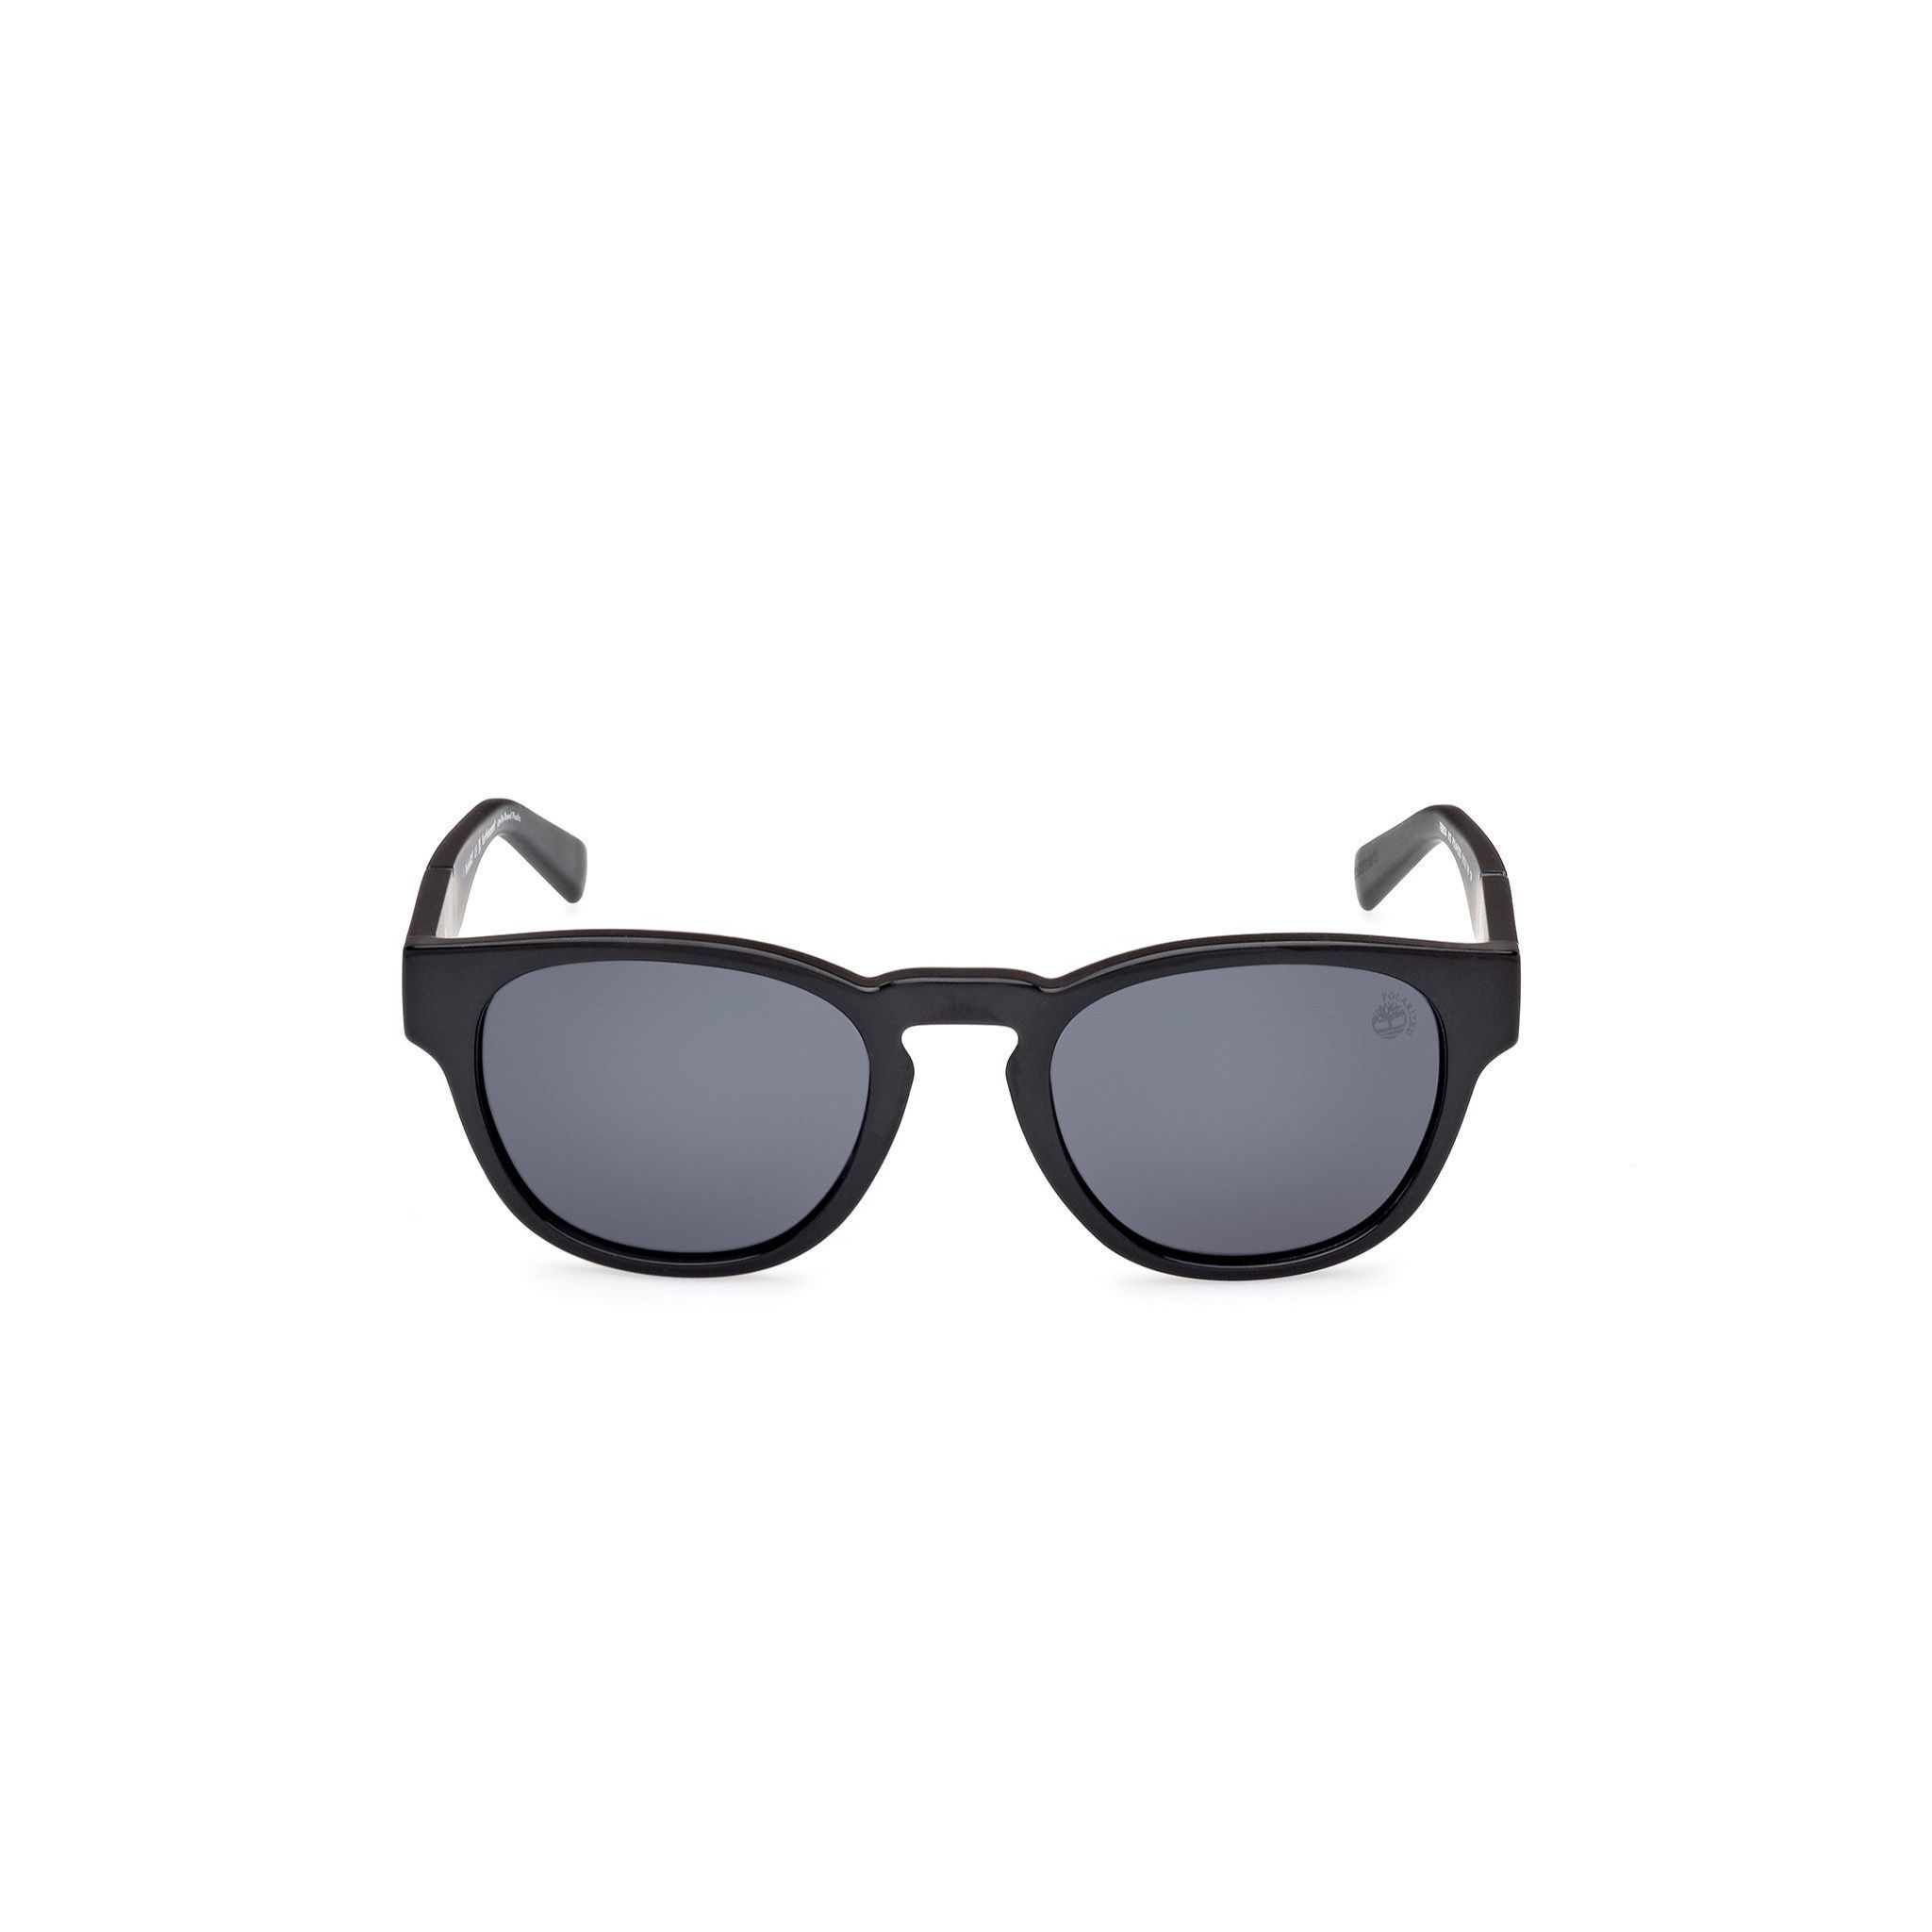 TB9334 Round Sunglasses 01D - size 51